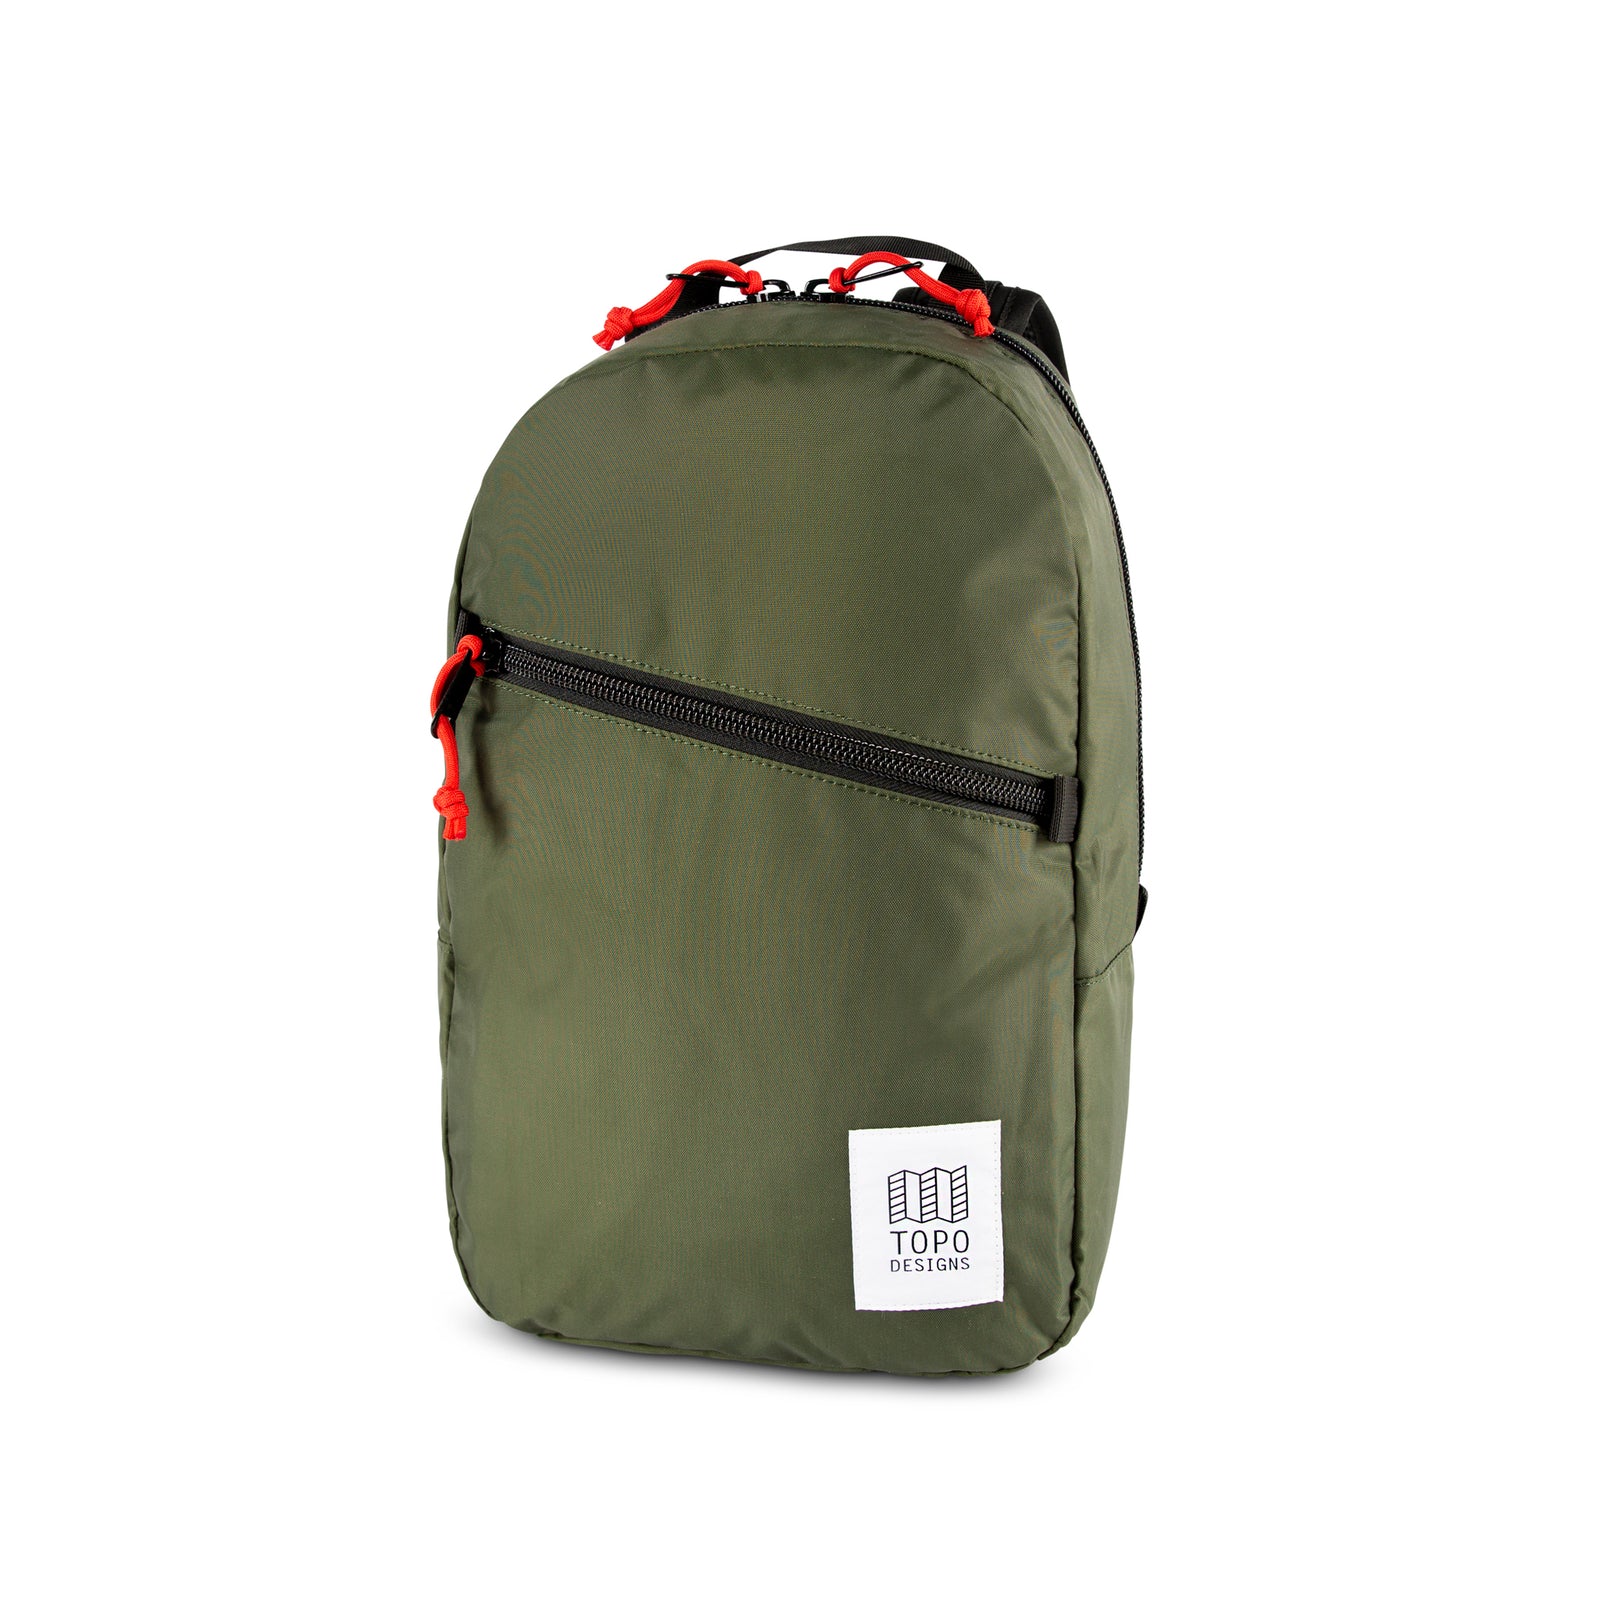 Topo Designs Light Pack laptop backpack in "Olive".